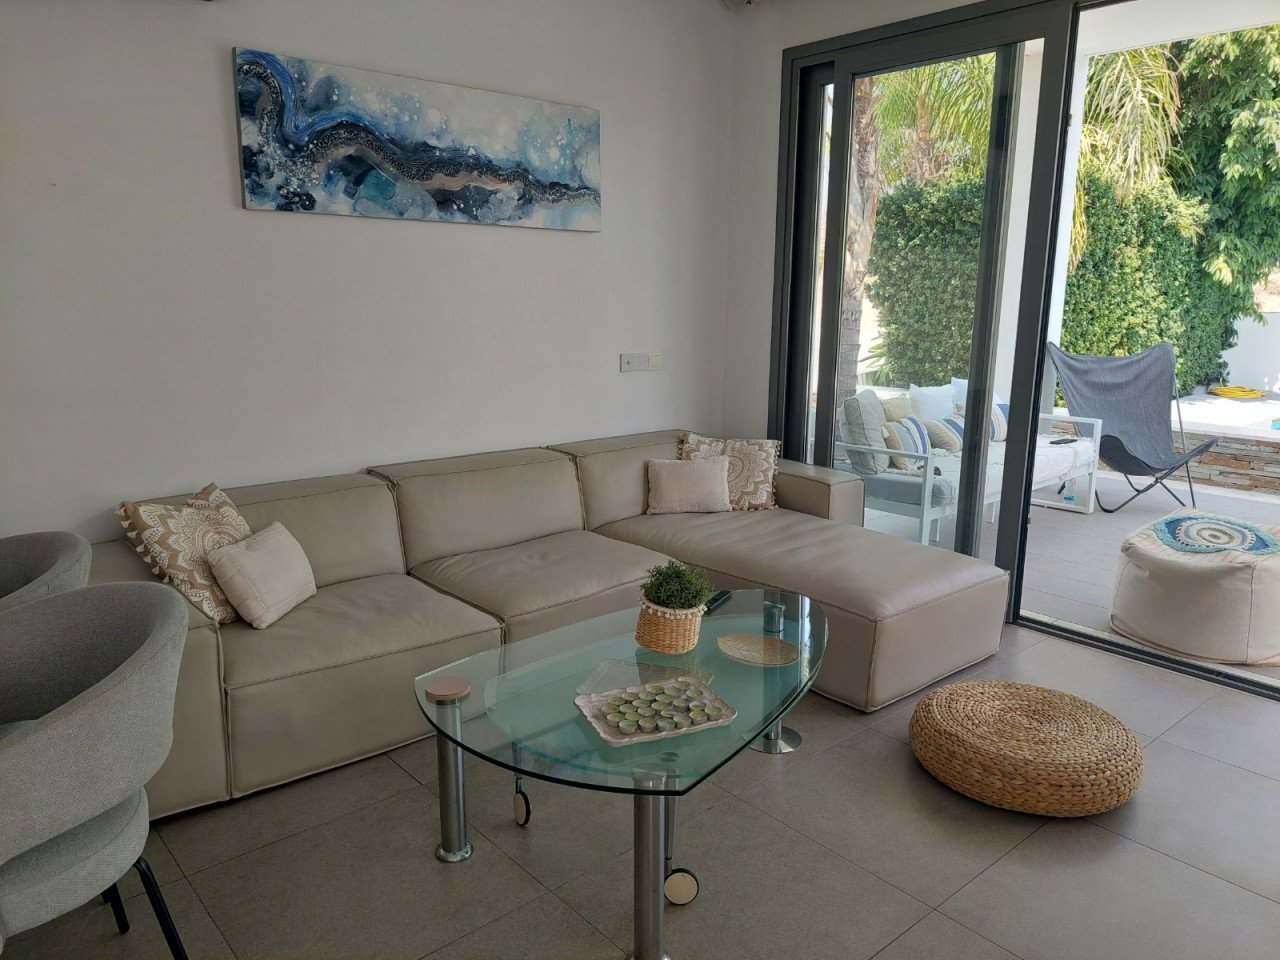 Property for Rent: House (Detached) in Pentakomo, Limassol for Rent | Key Realtor Cyprus